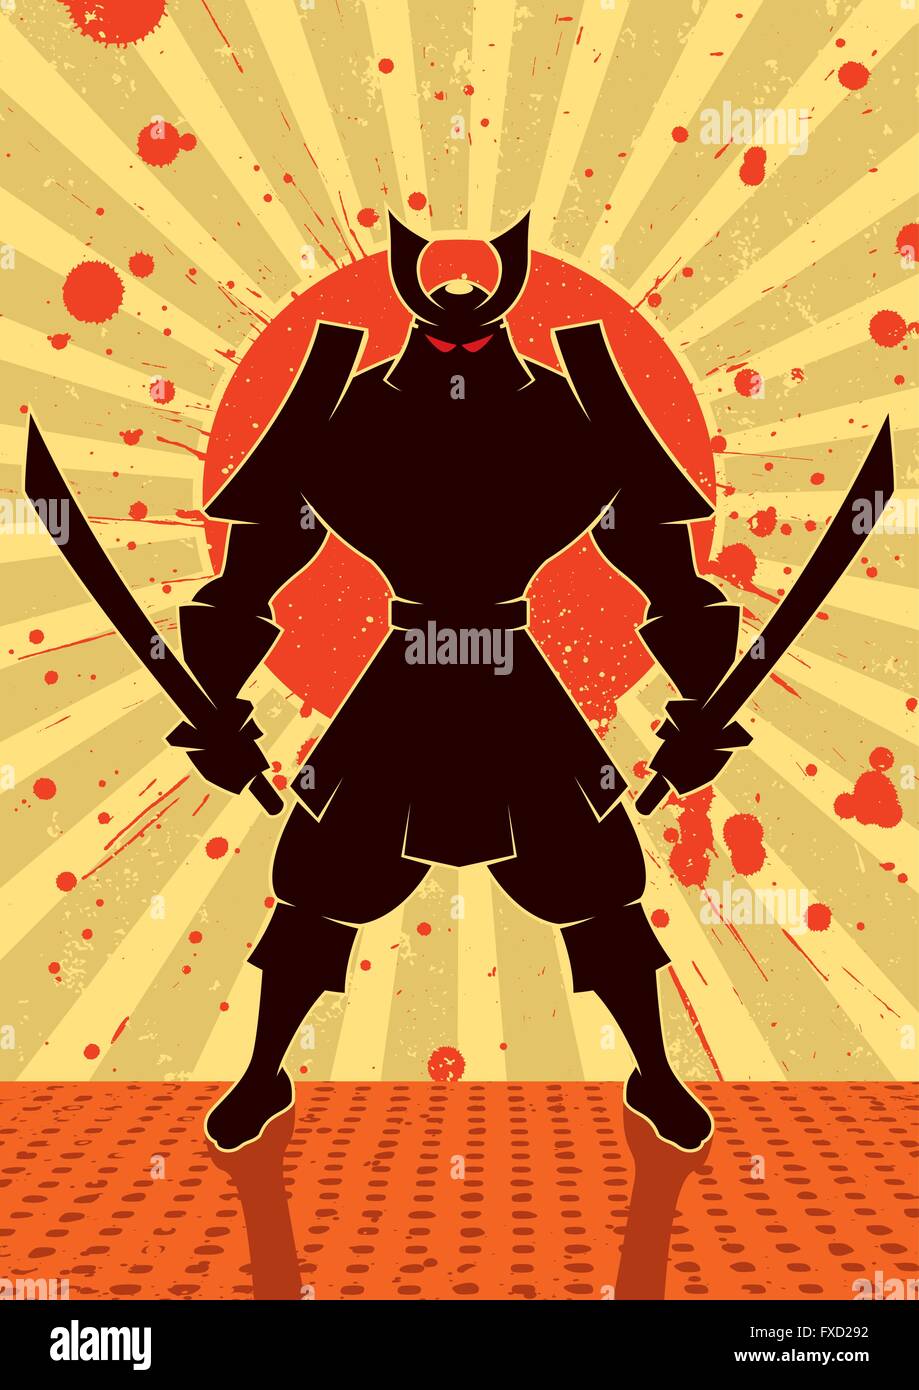 Cartoon illustration of samurai warrior. Stock Vector